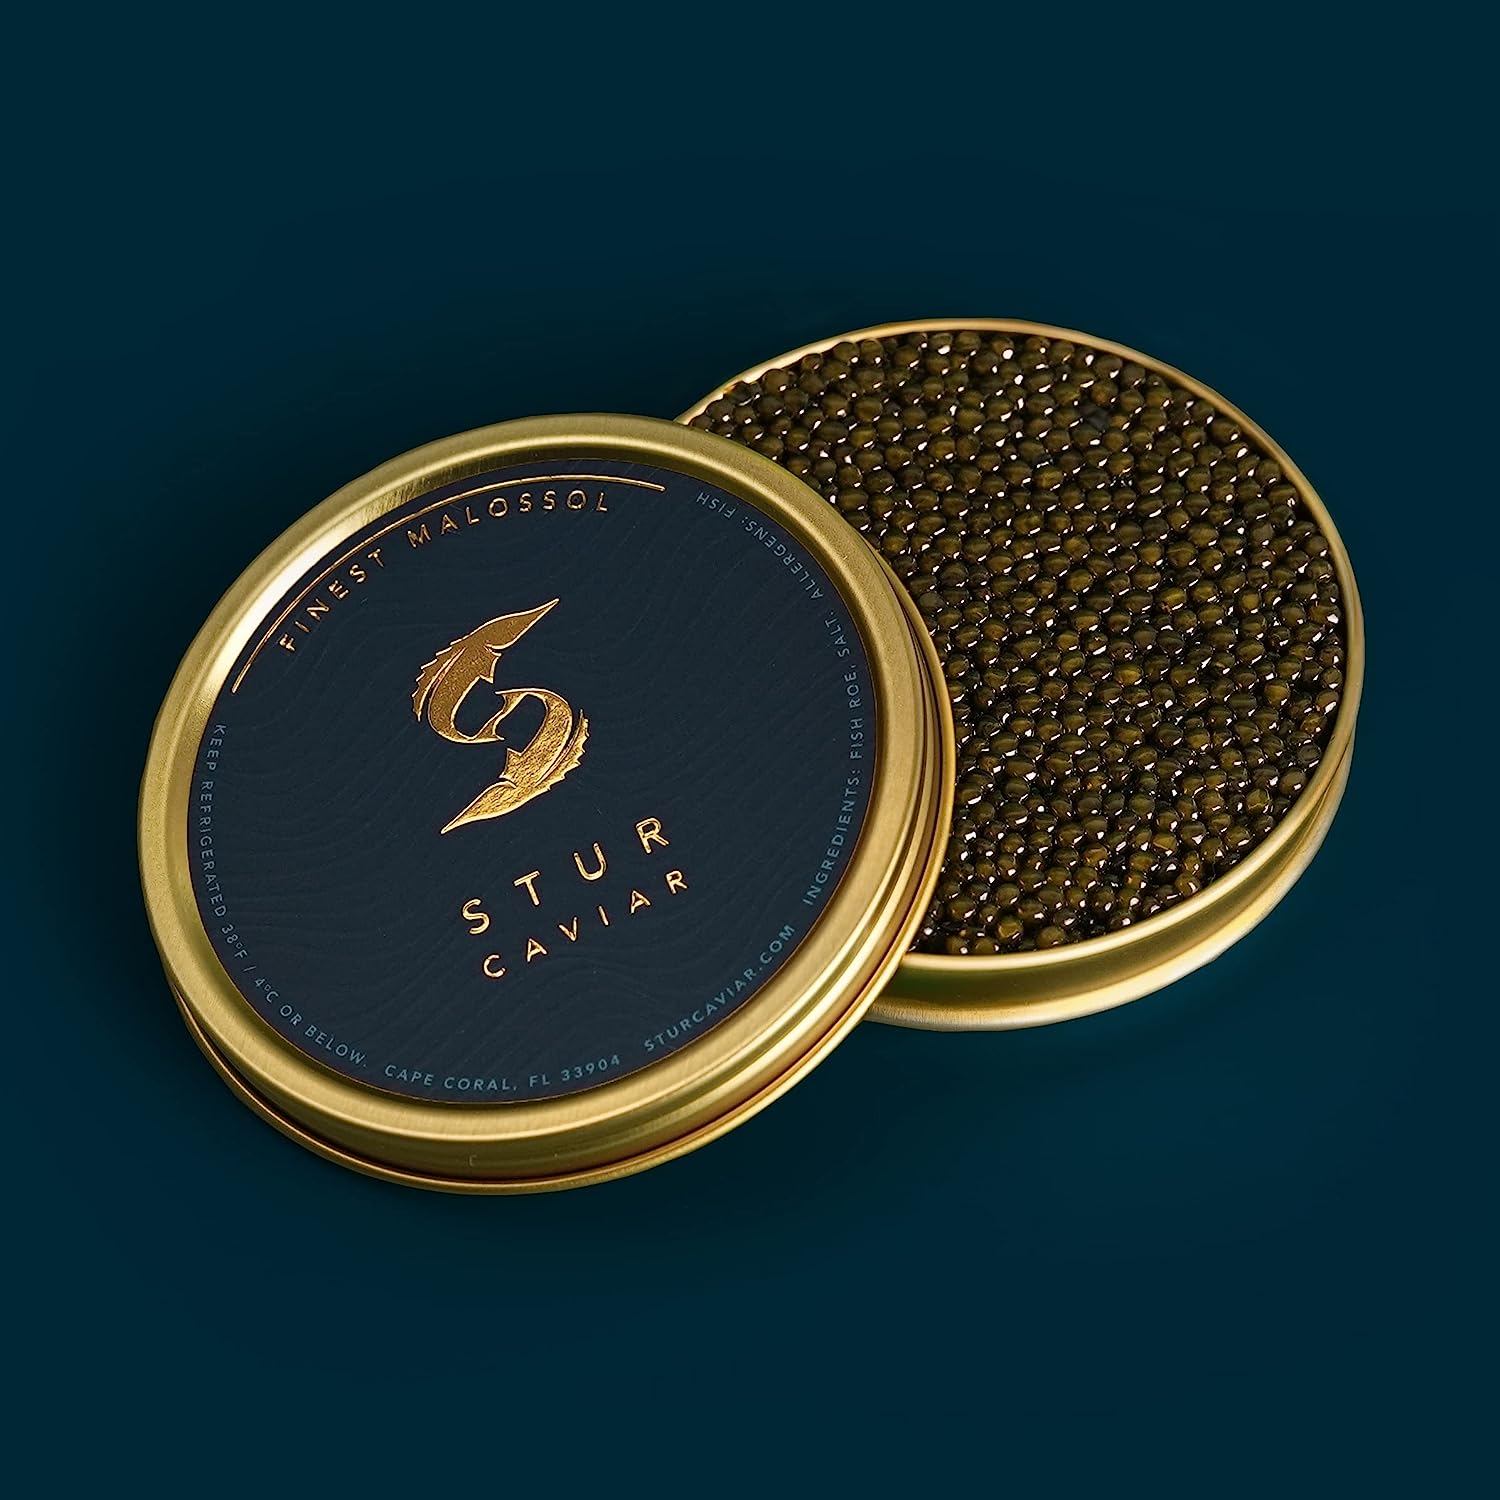 STUR Royal Osetra Sturgeon Caviar - 3.5 OZ / 100 GR - Ossetra Black Roe - OVERNIGHT GUARANTEED